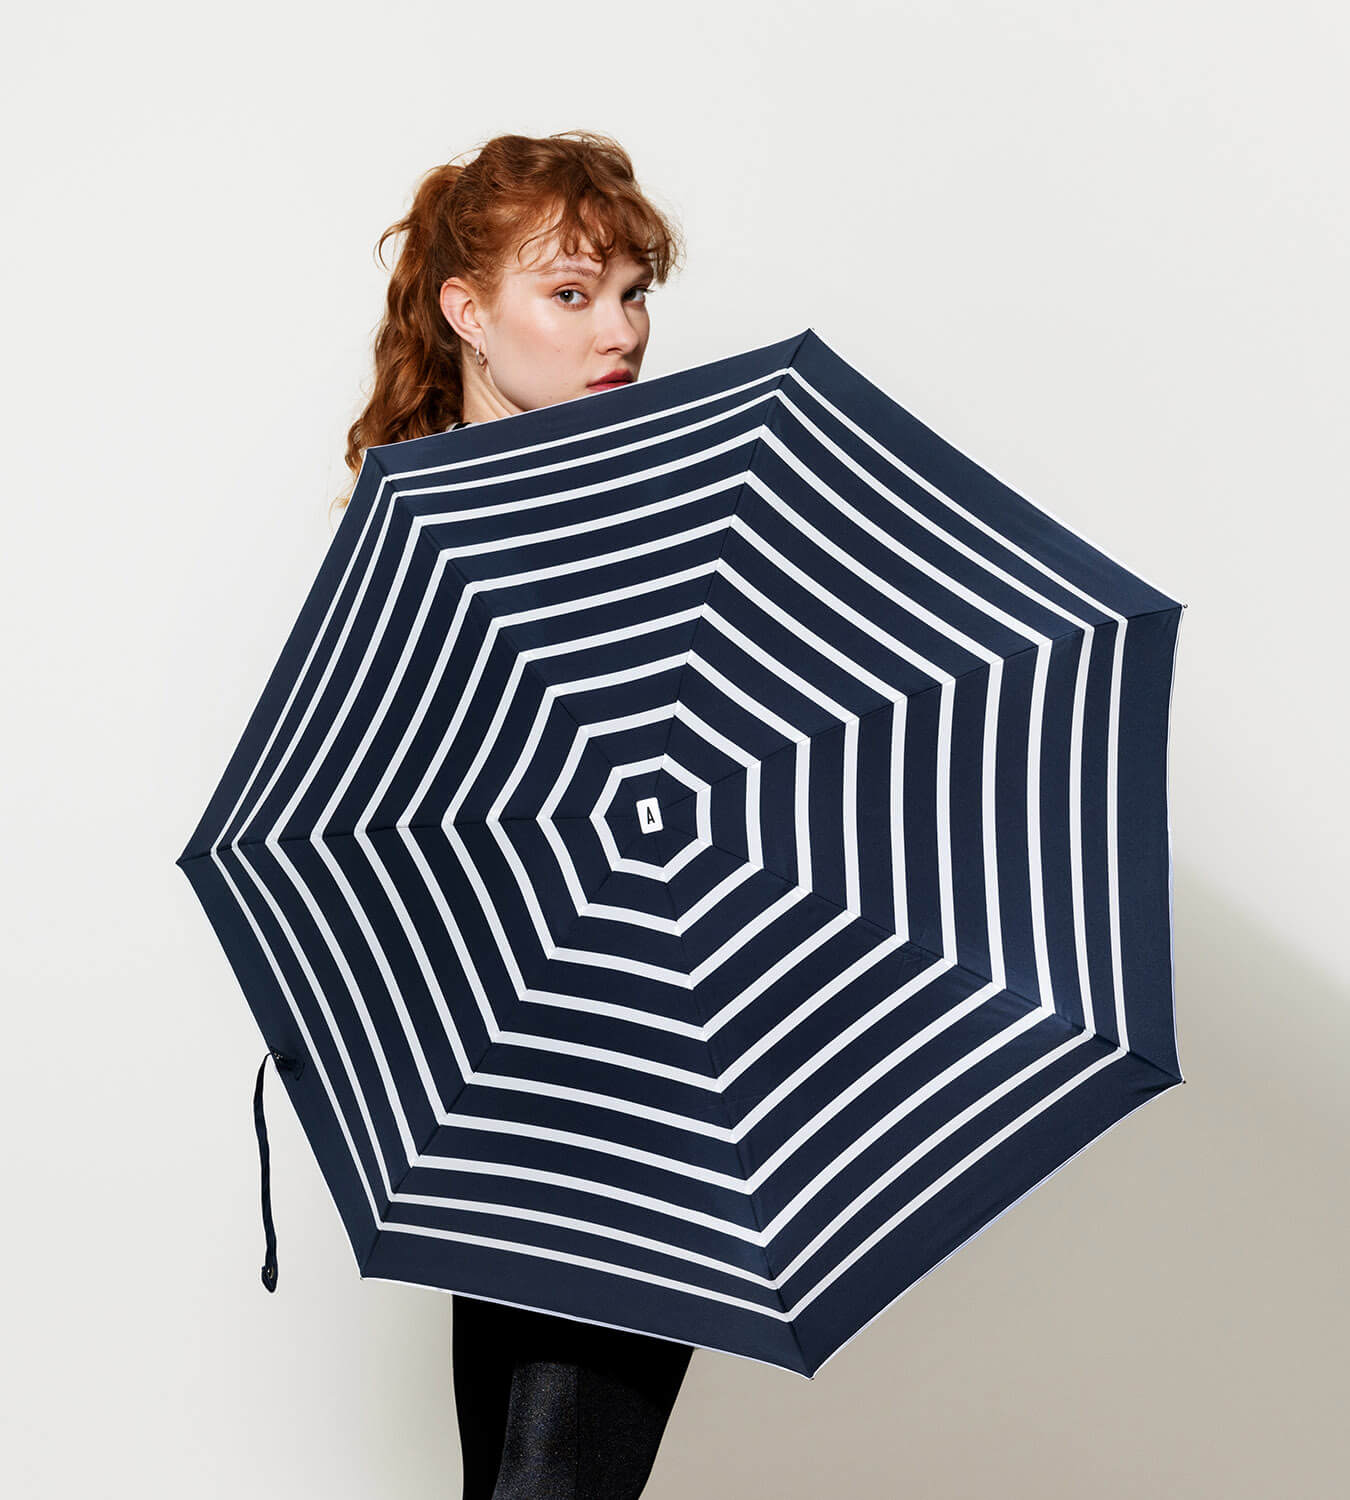 ANATOLE PARIS - Striped navy micro- umbrella white stripes PABLO